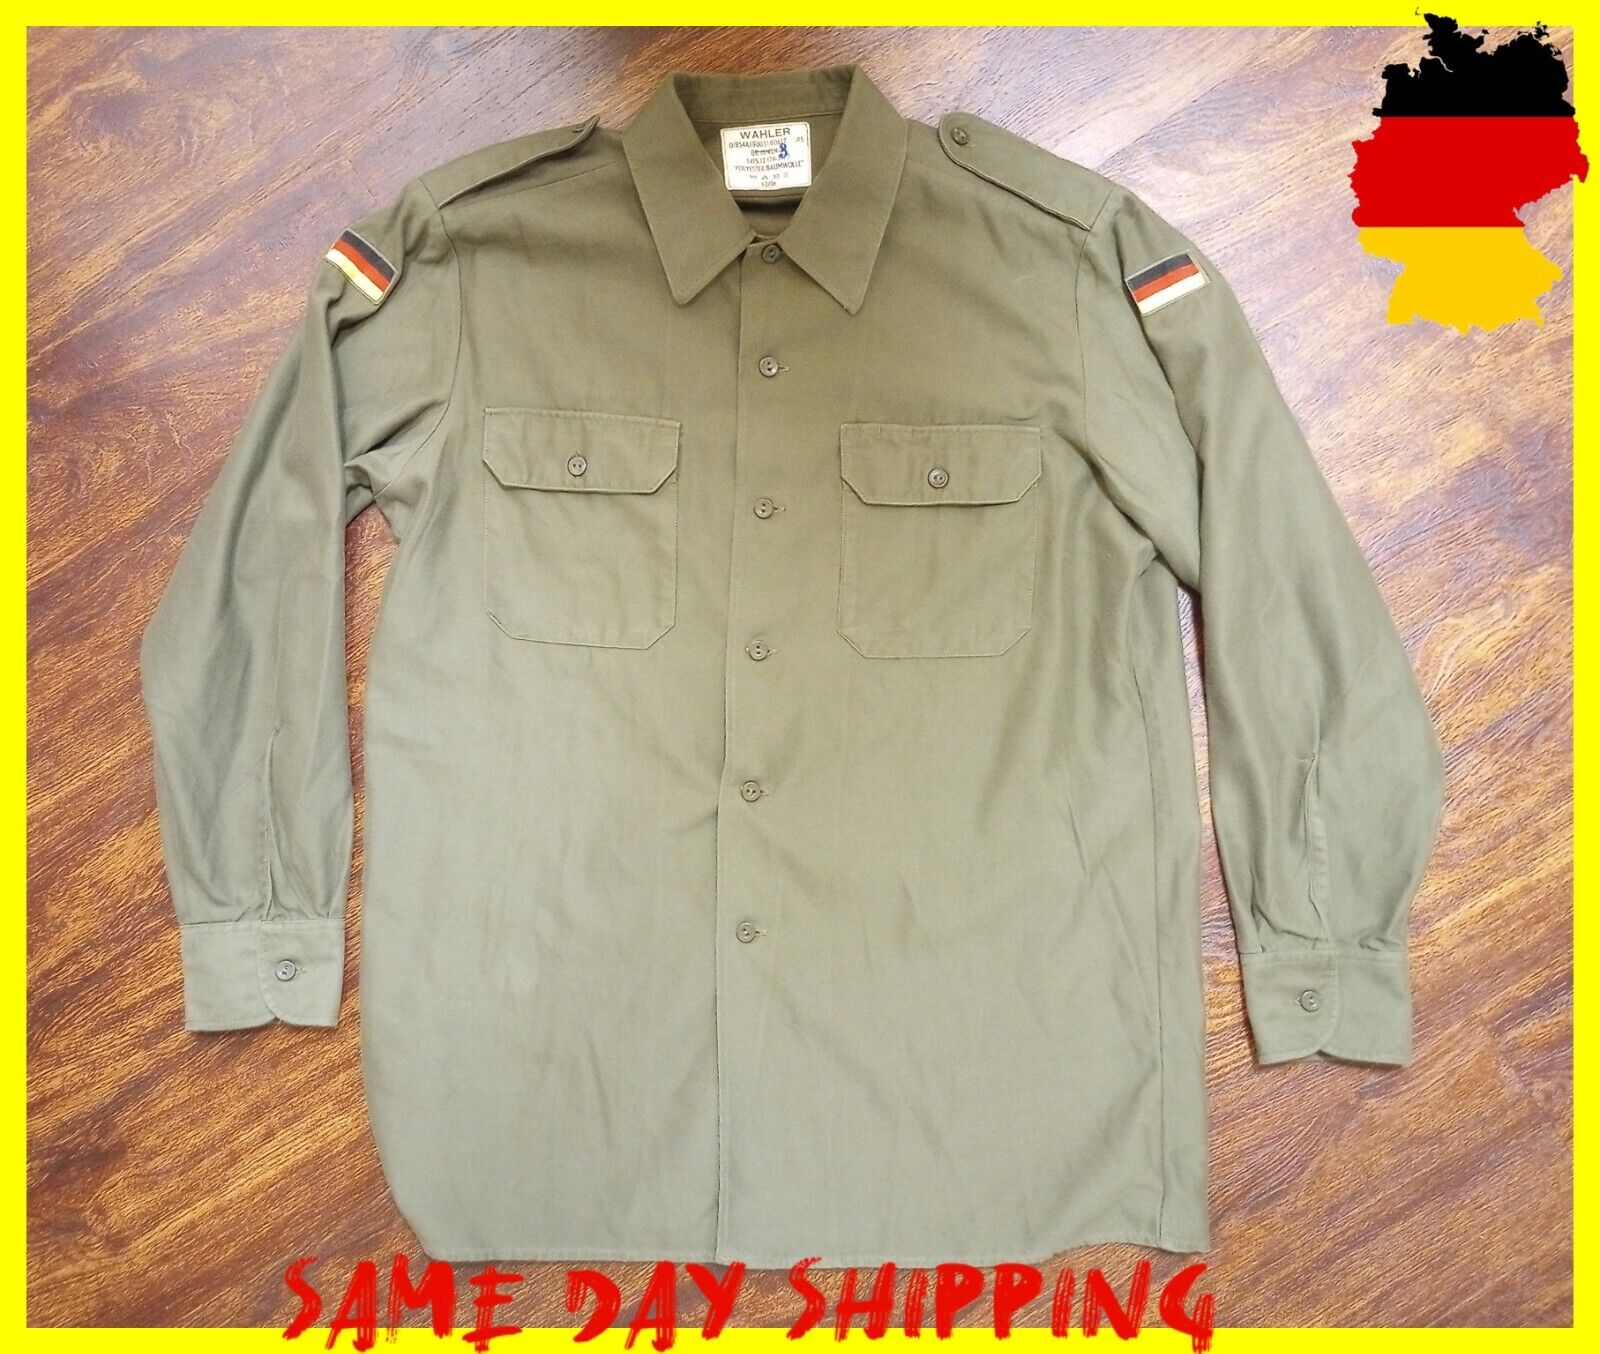 Vintage 1962 Wahler German Army Military Shirt Men's GR. 41/42 Size - 23x27x19